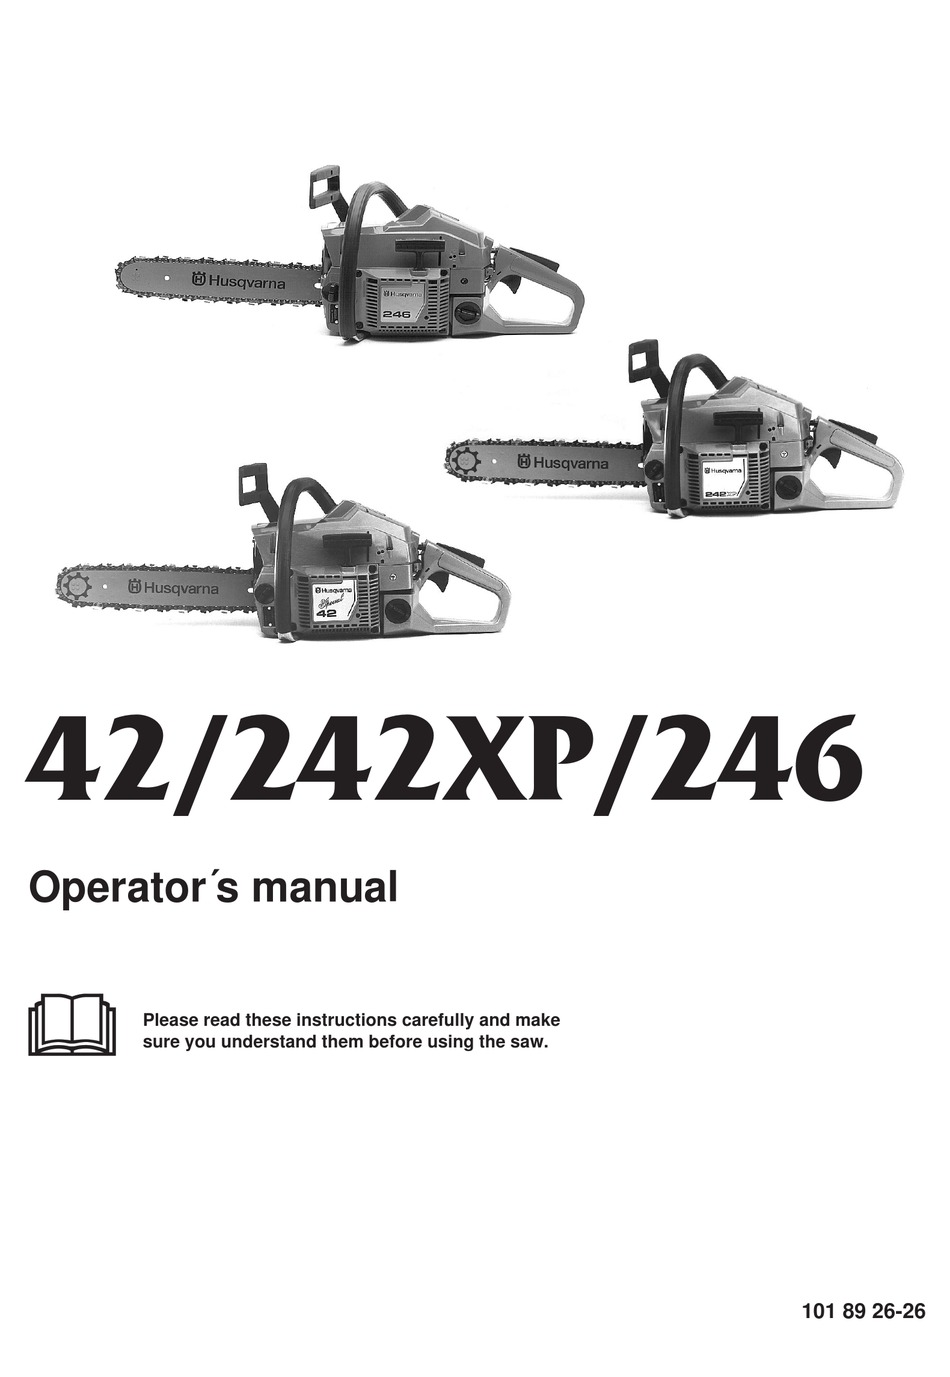 246 CHAINSAW Instruction Owner's Manual OEM NEW Genuine HUSQVARNA 42 242XP 